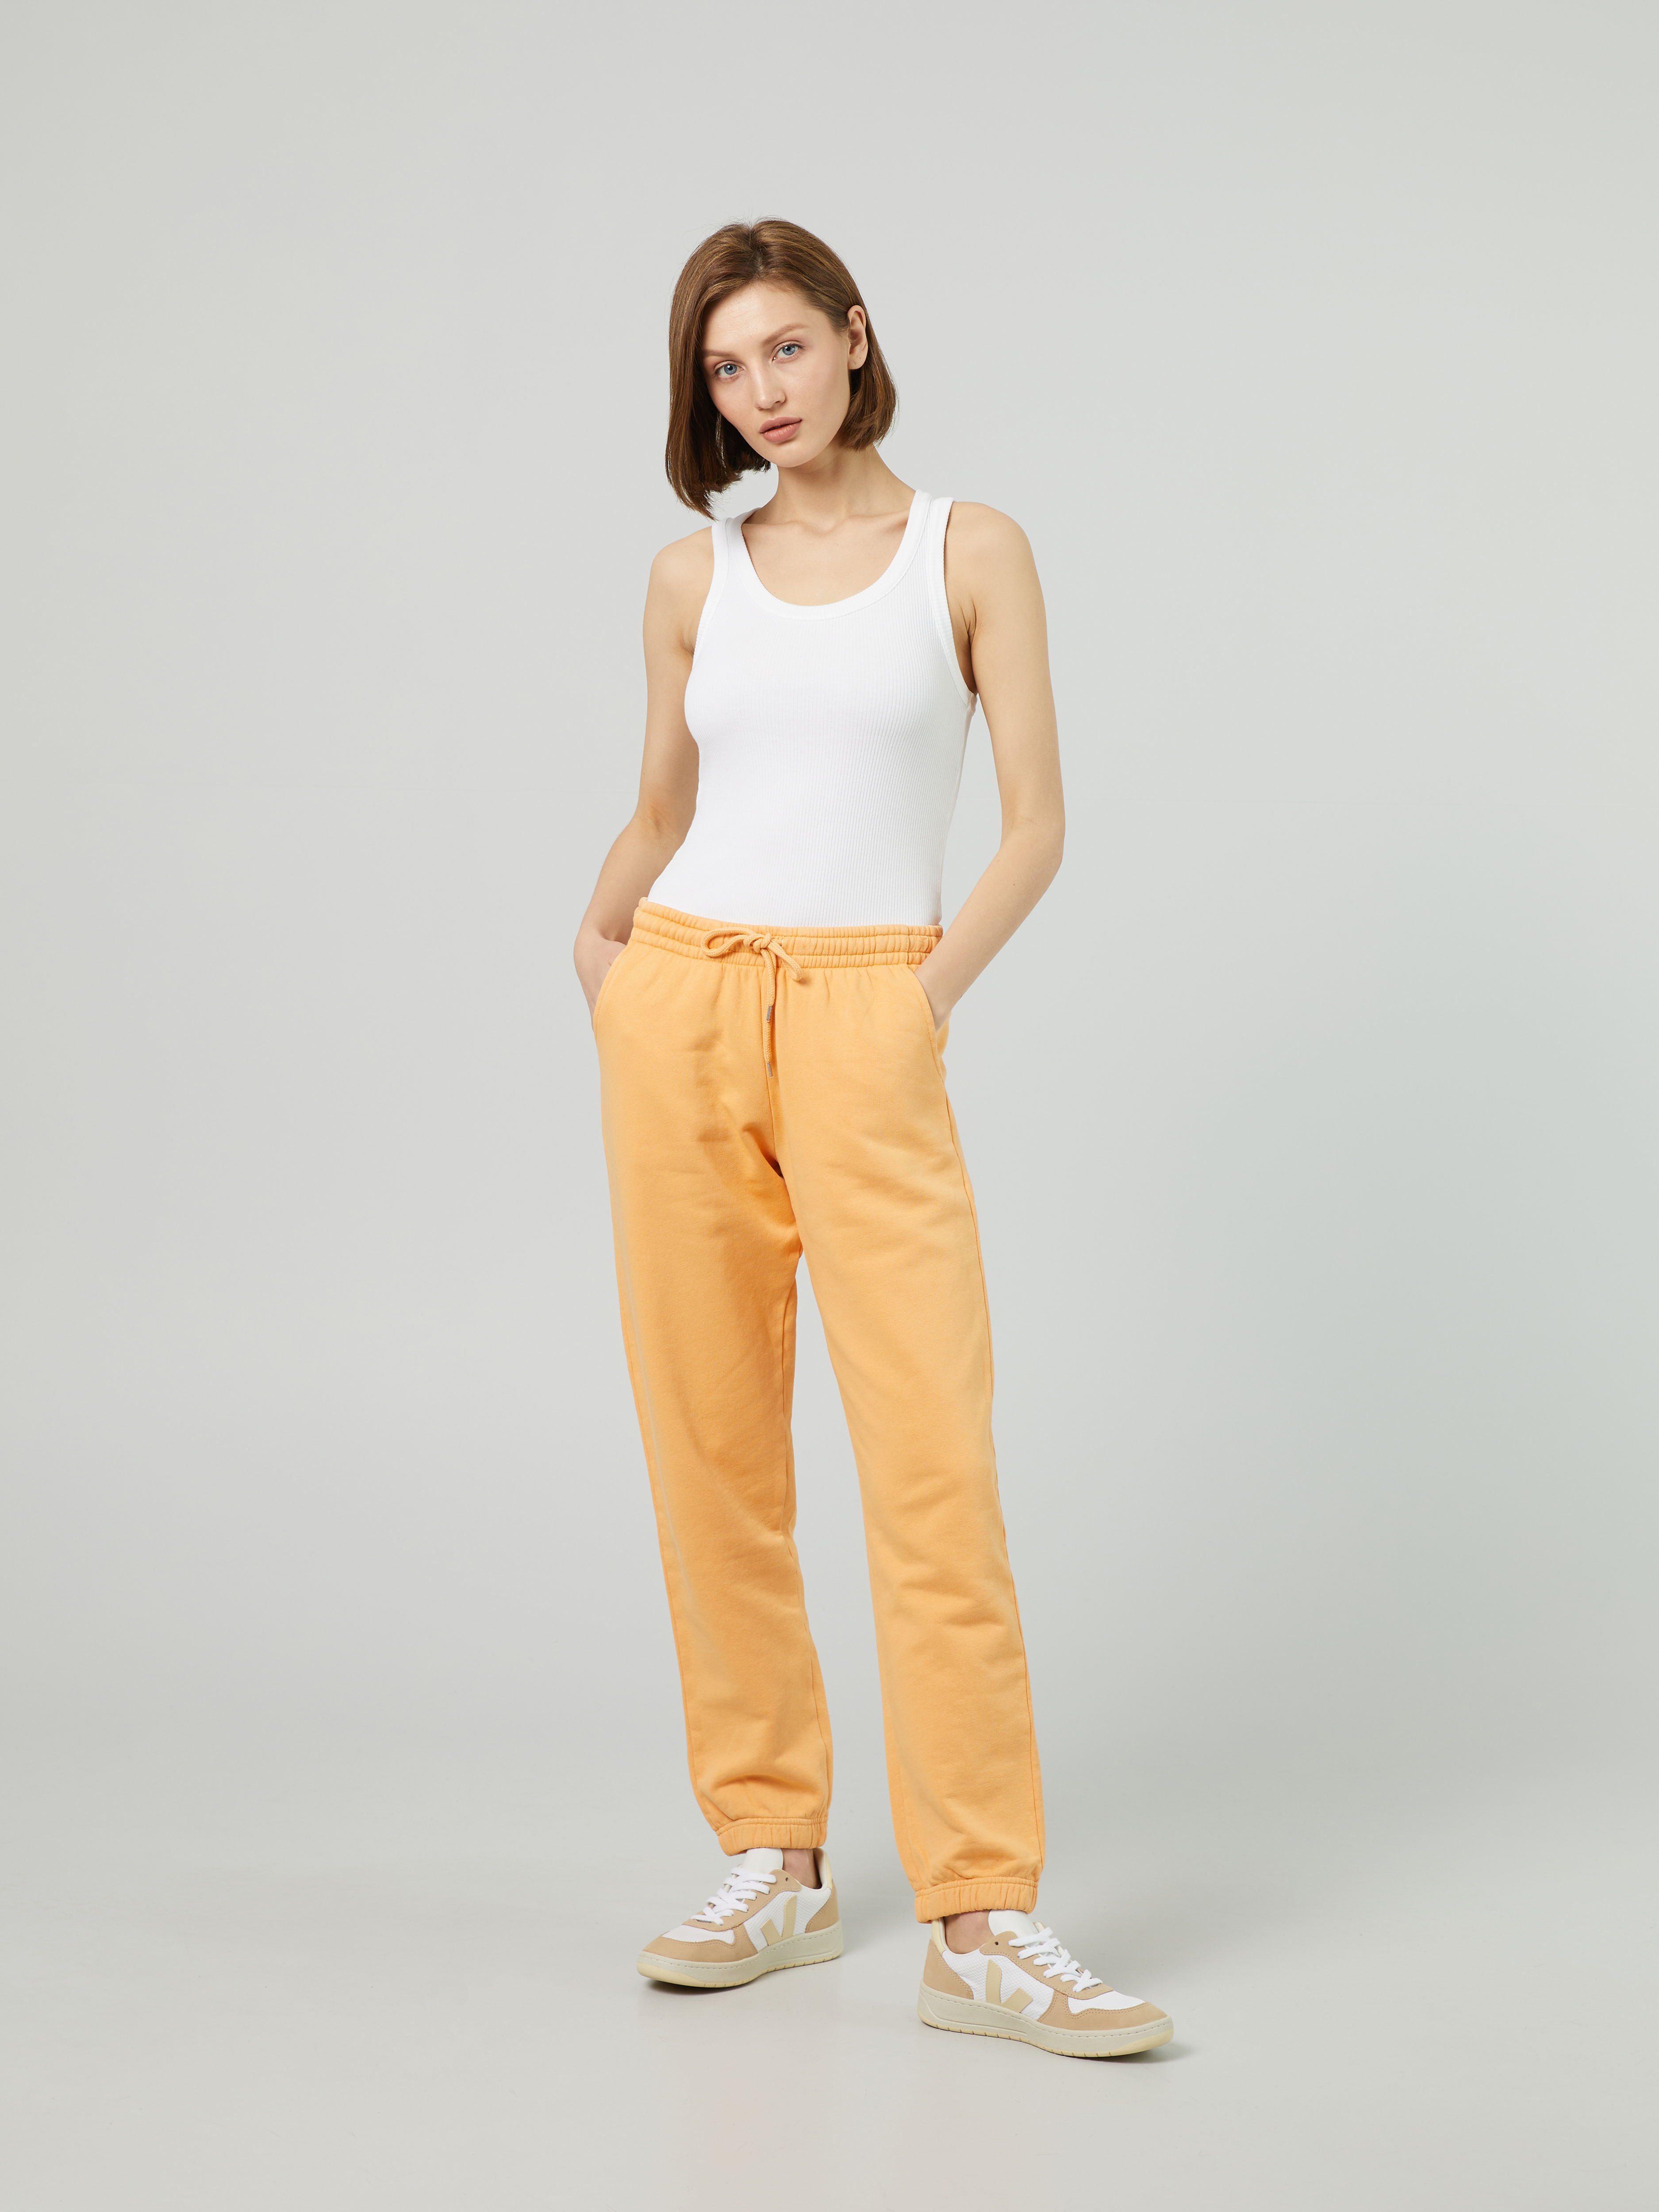 Deepra Creation Women Cotton Lycra Jumbo Trousers Pants|Plus Size Loose Fit  Trousers Pants With Pocket